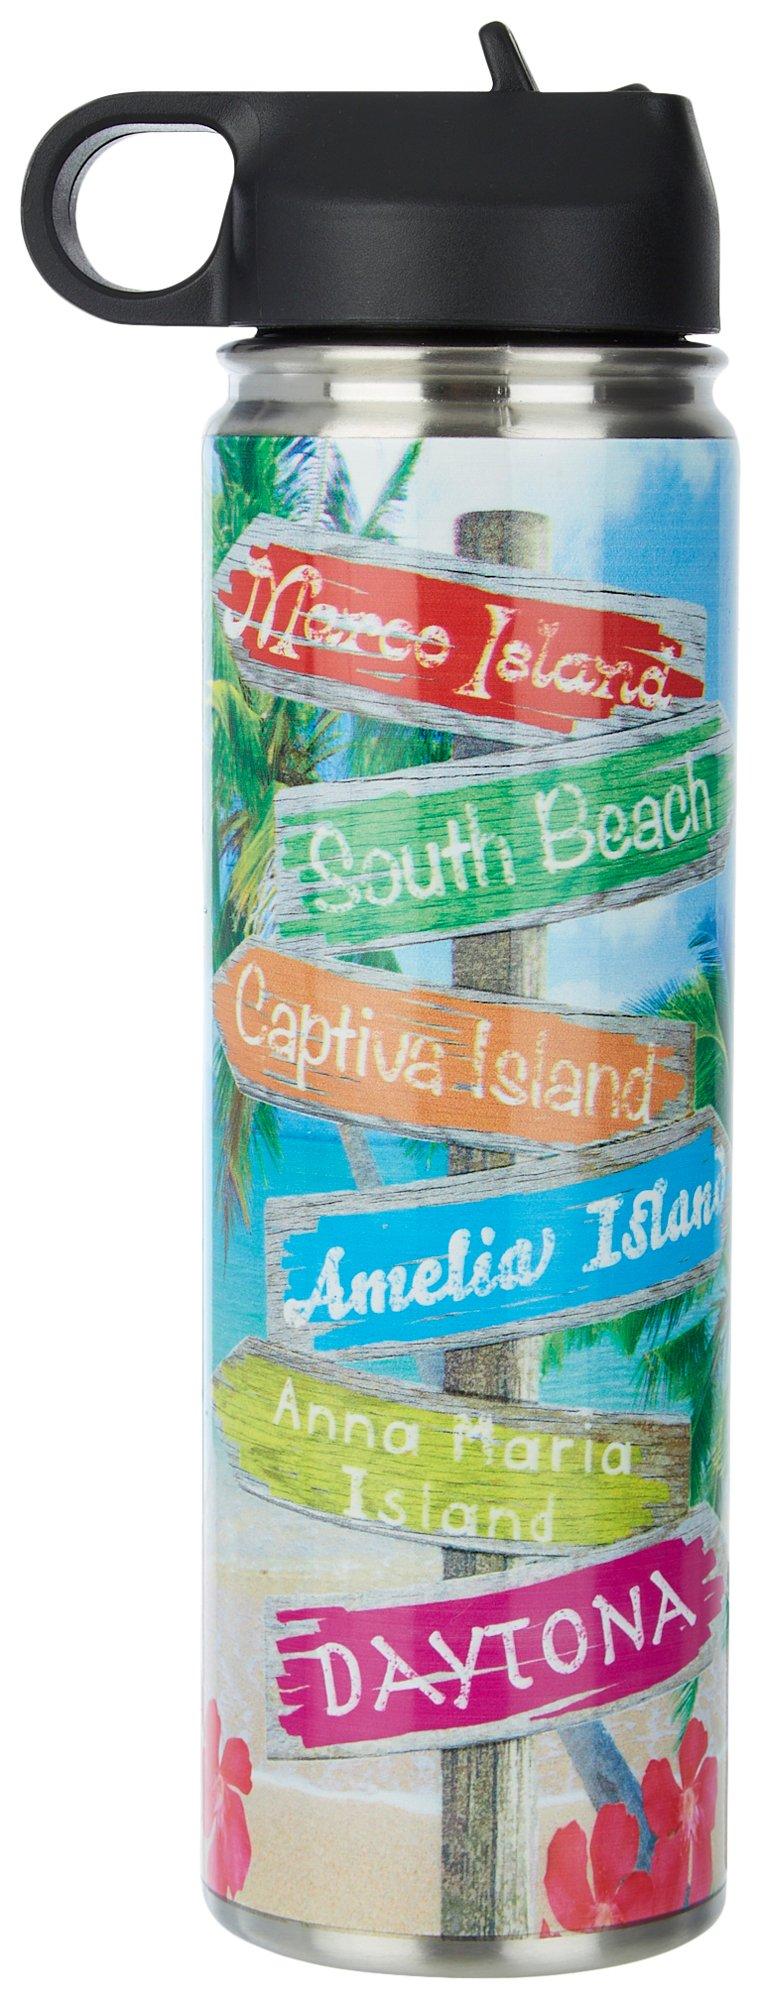 22 oz. Island Signs Water Bottle